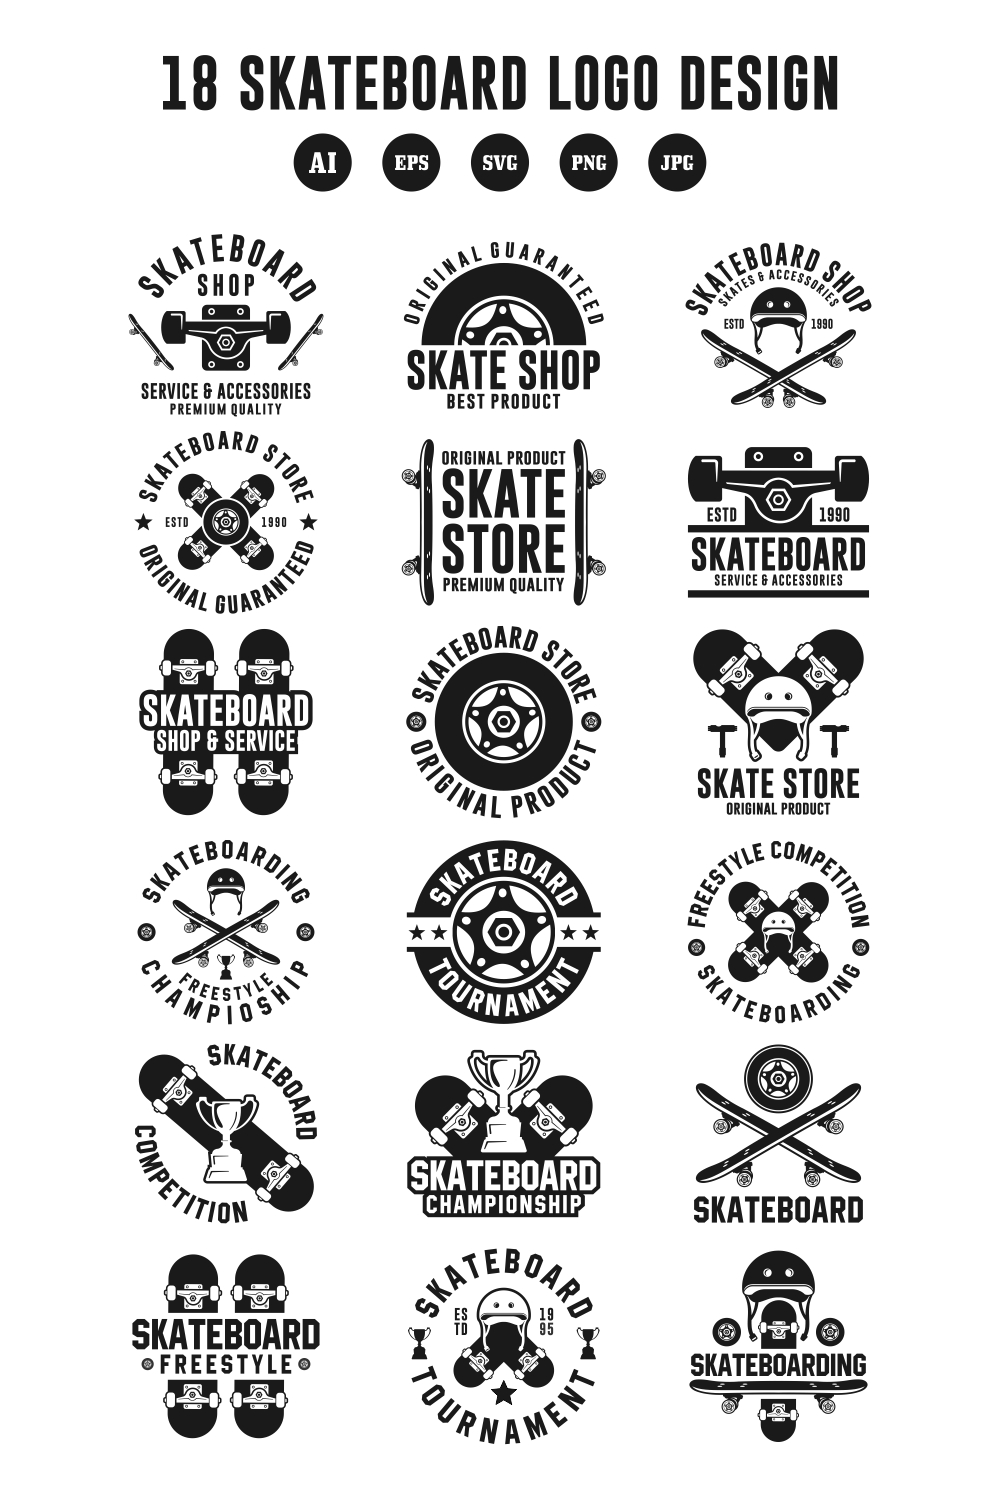 18 Skateboard design logo colllection pinterest preview image.